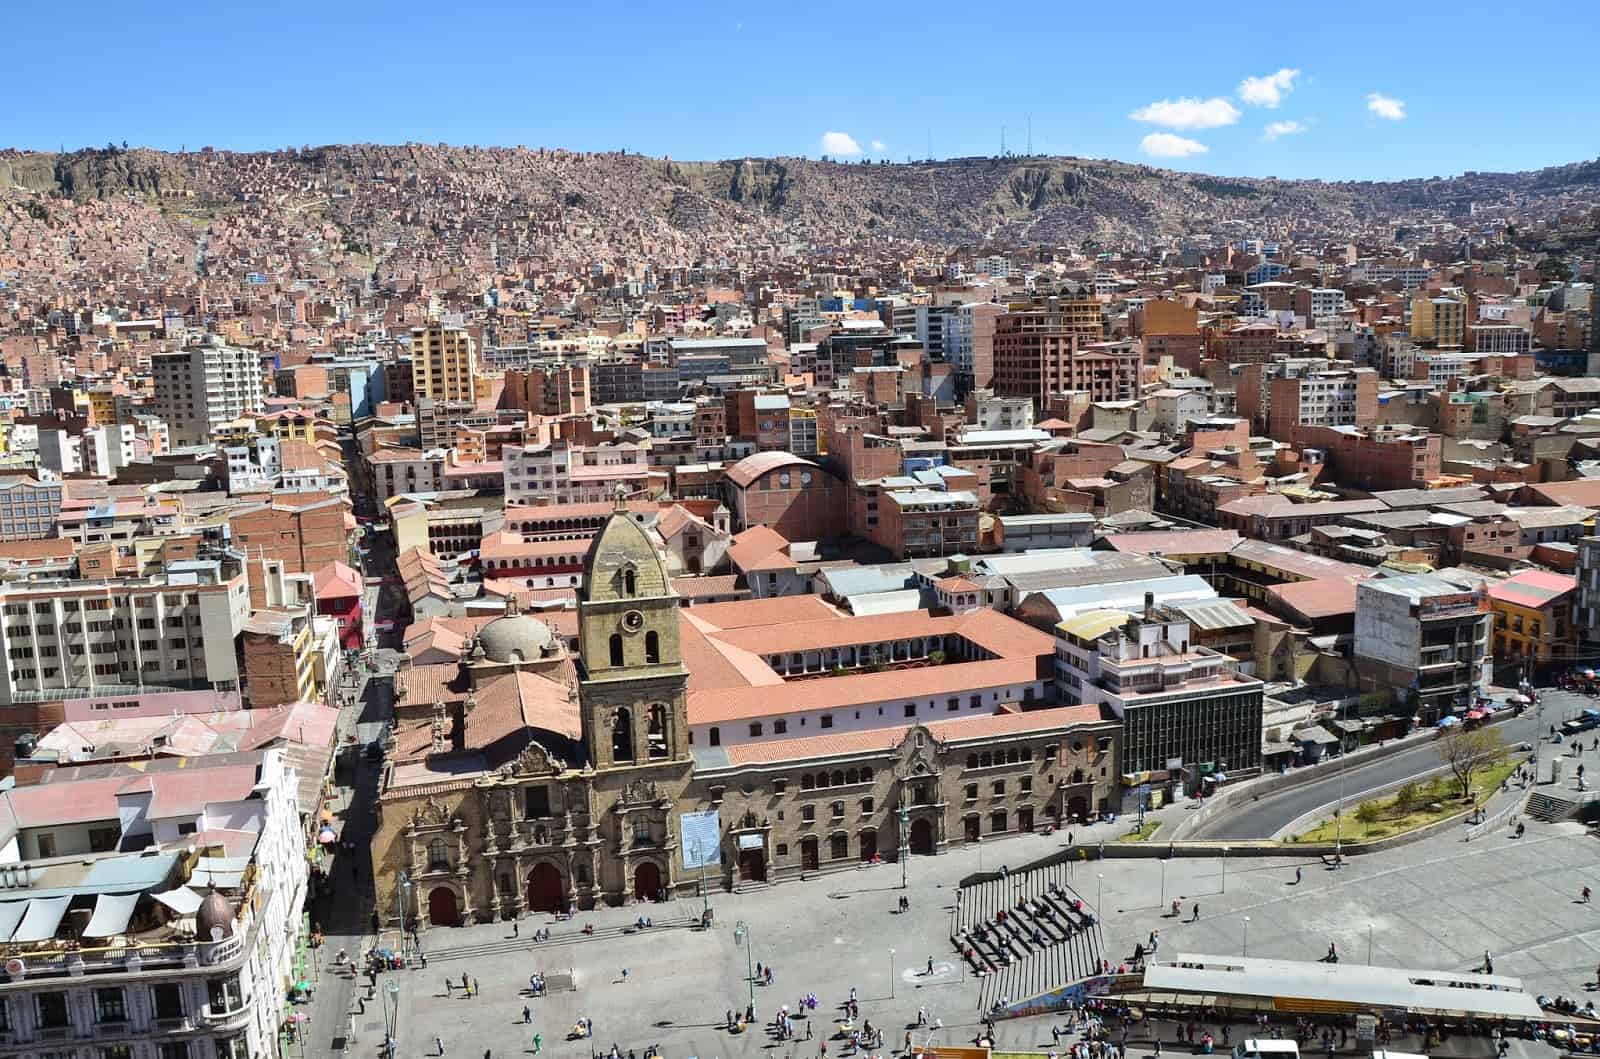 View from Hotel Presidente in La Paz, Bolivia